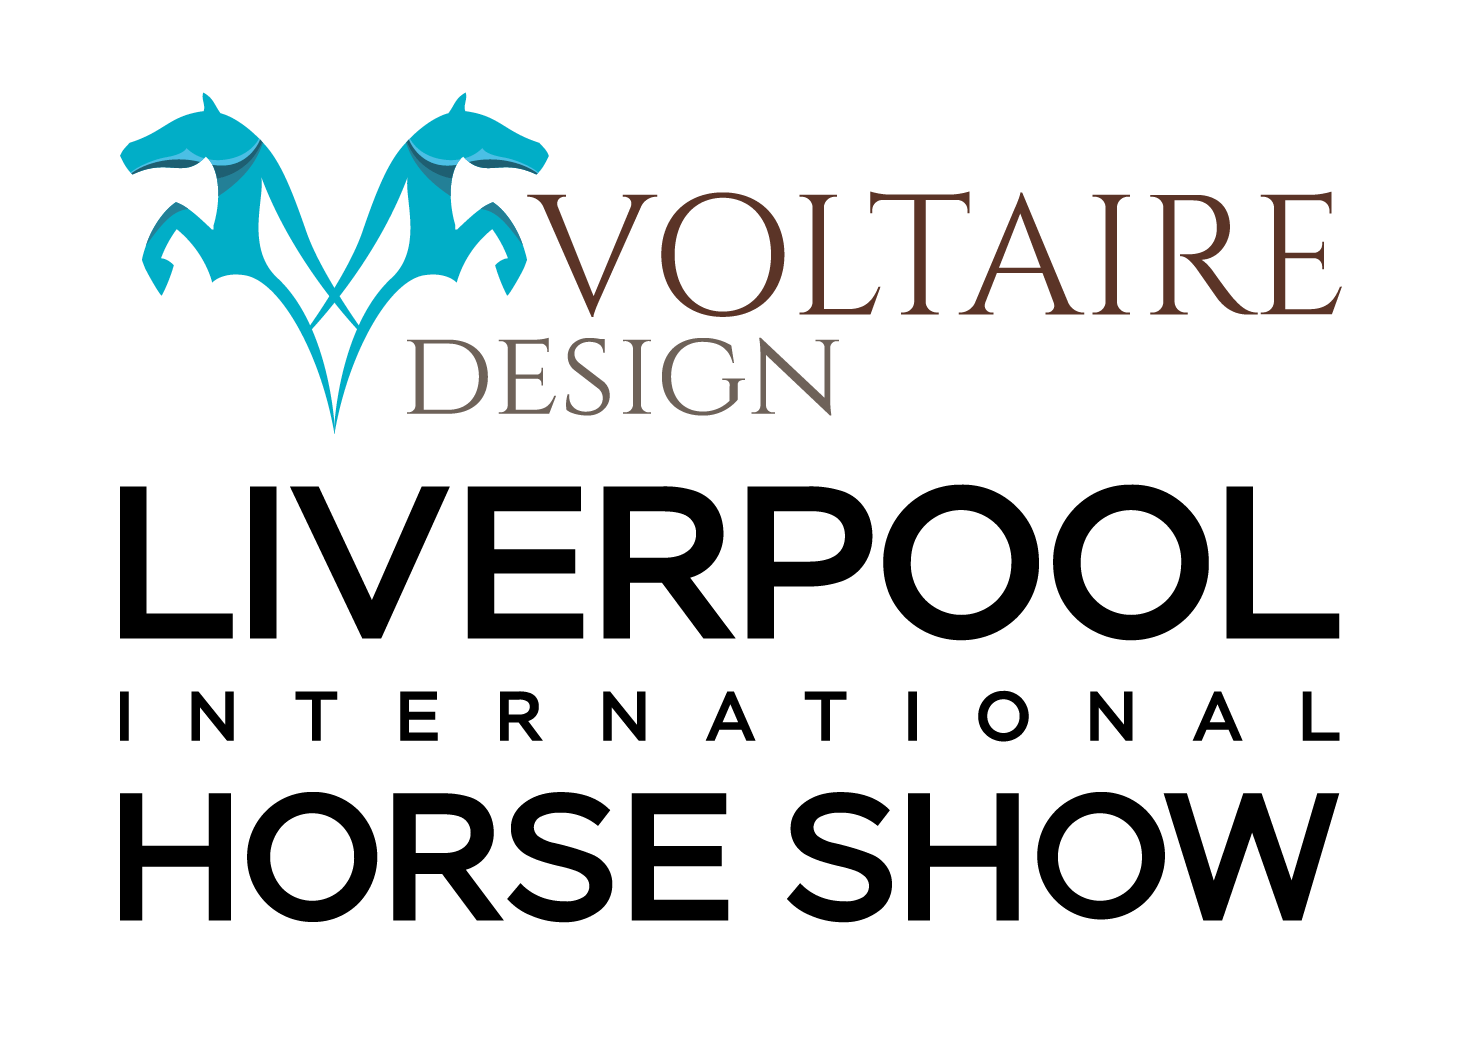 Liverpool International Horse Show - Voltaire Design